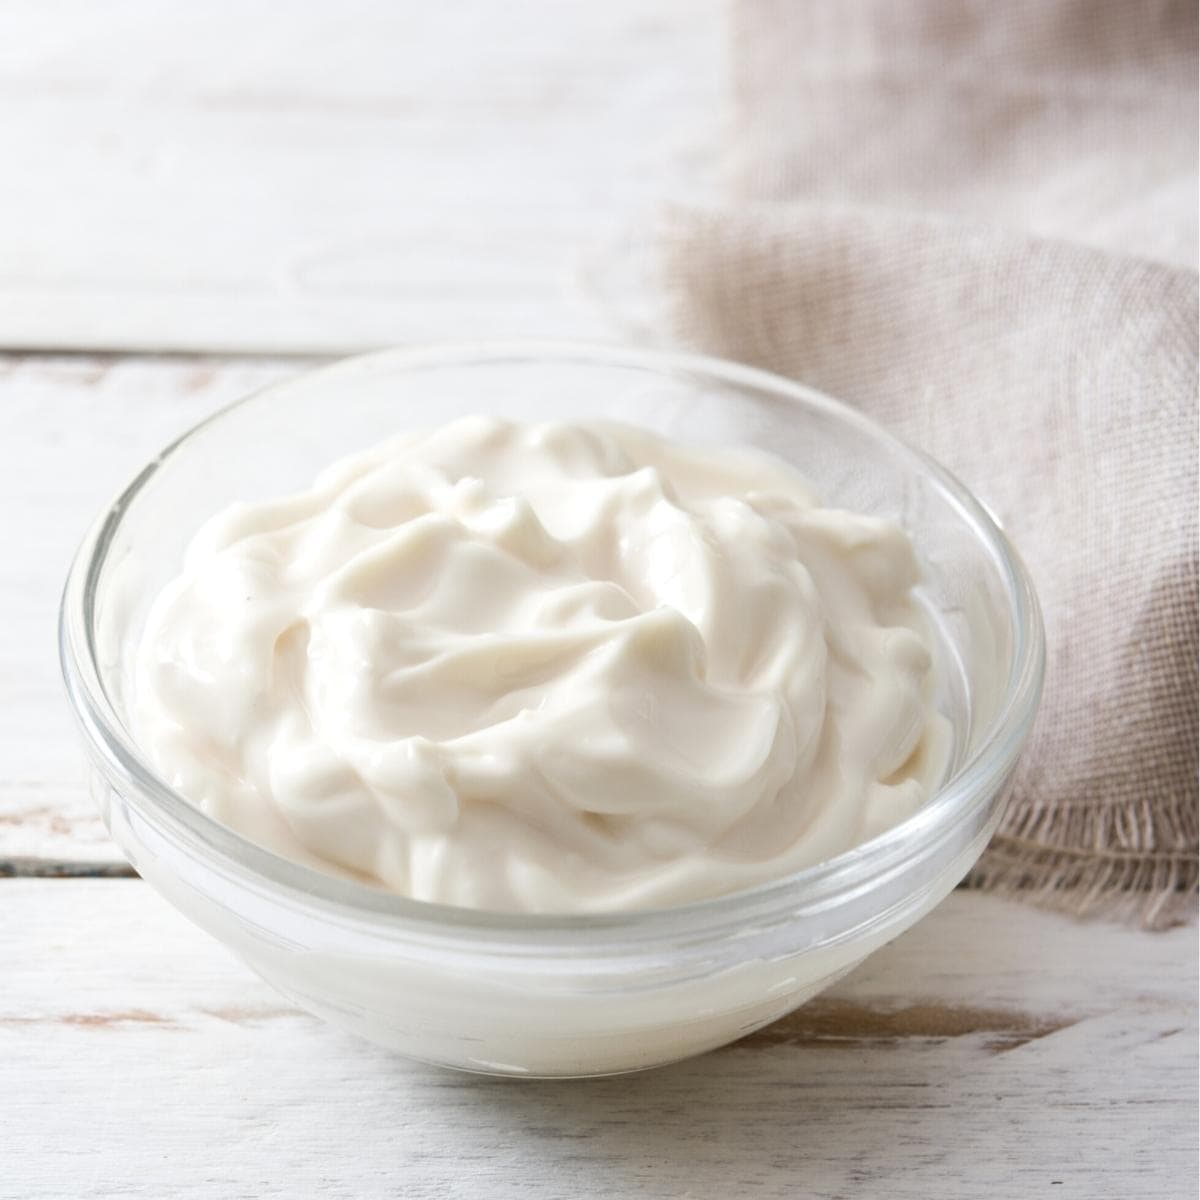 sour cream as a milk alternative